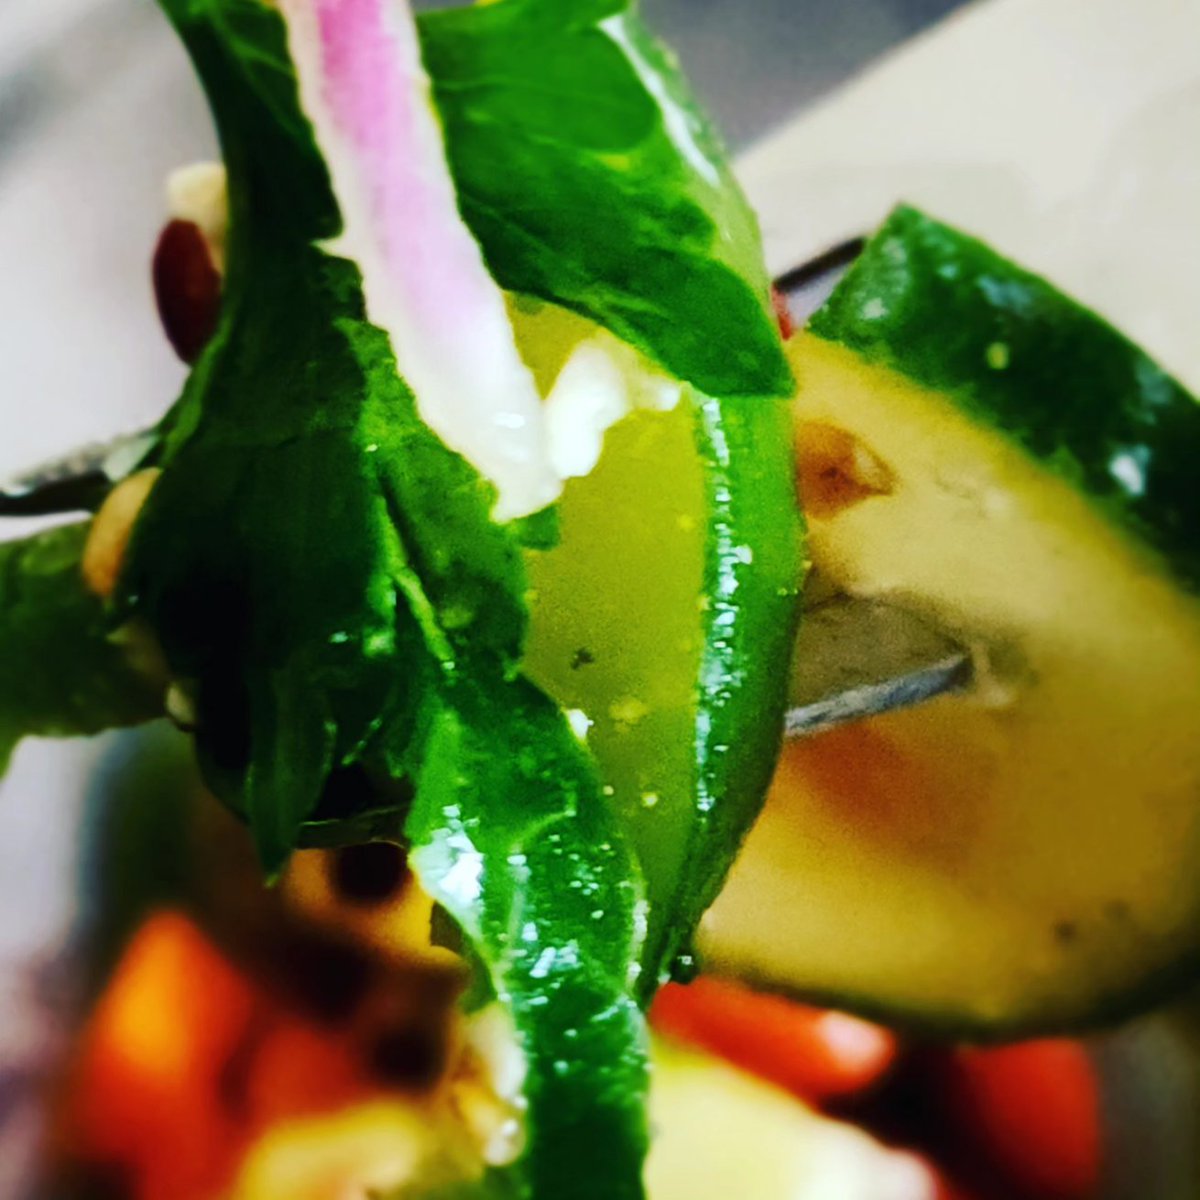 Garuda Bean Salad!

#kidneybeans #pintobeans #limabeans #redonion #grapetomatoes #parsley #greengoddessseasoning #garlic #cucumber #yellowbellpepper #greenbellpepper #greenolives #Garuda #mealplaning #mealplan #mealprepplanning #mealprep #mealprepping #macronutrients